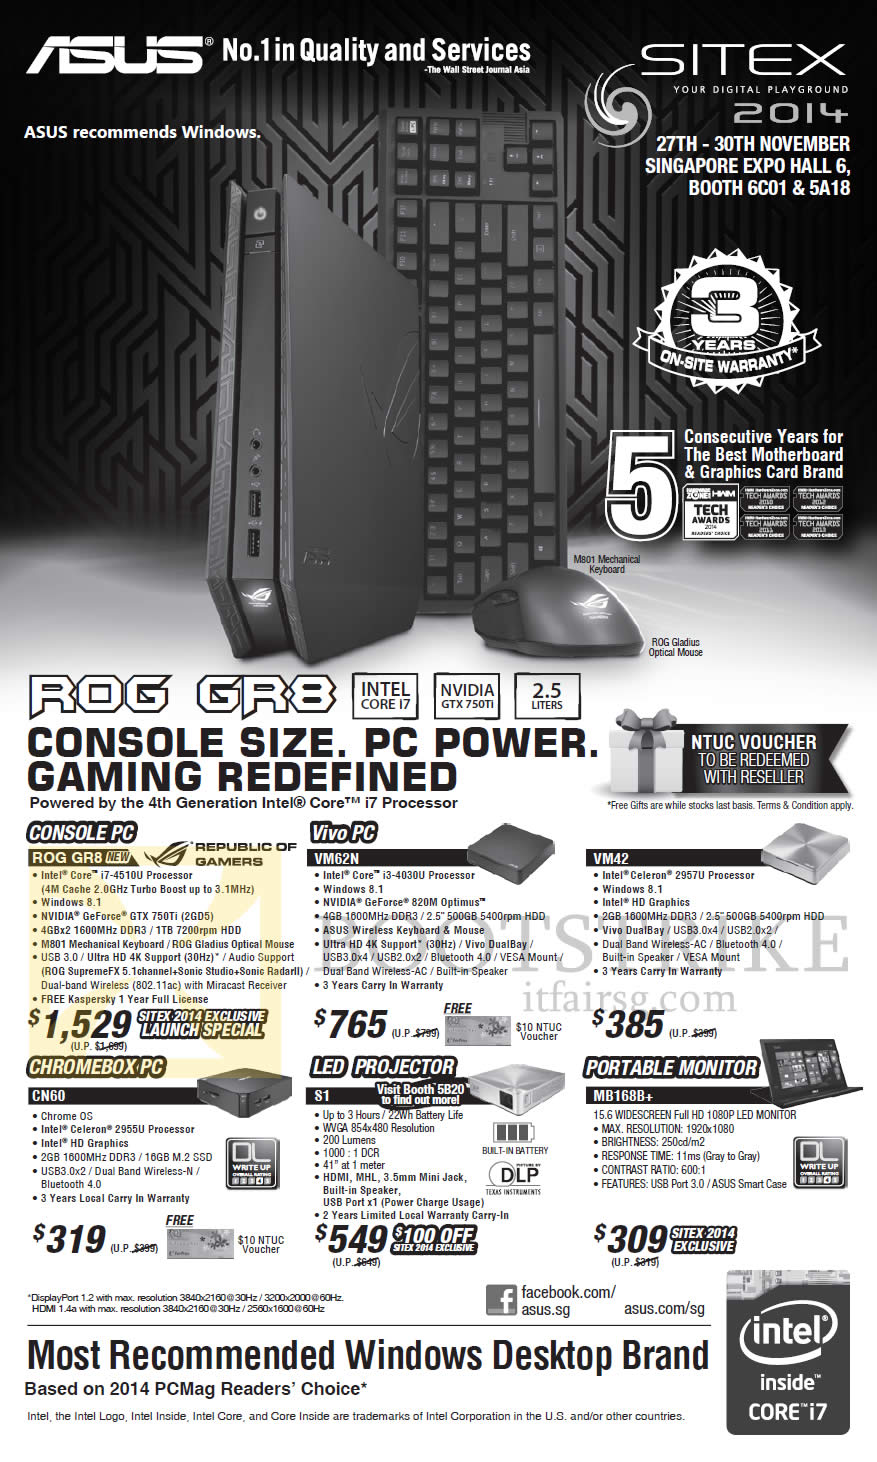 SITEX 2014 price list image brochure of ASUS Desktop PCs, Monitor, Projector, ROG GR8, VM62N, VM42, CN60, S1, MB168B Plus